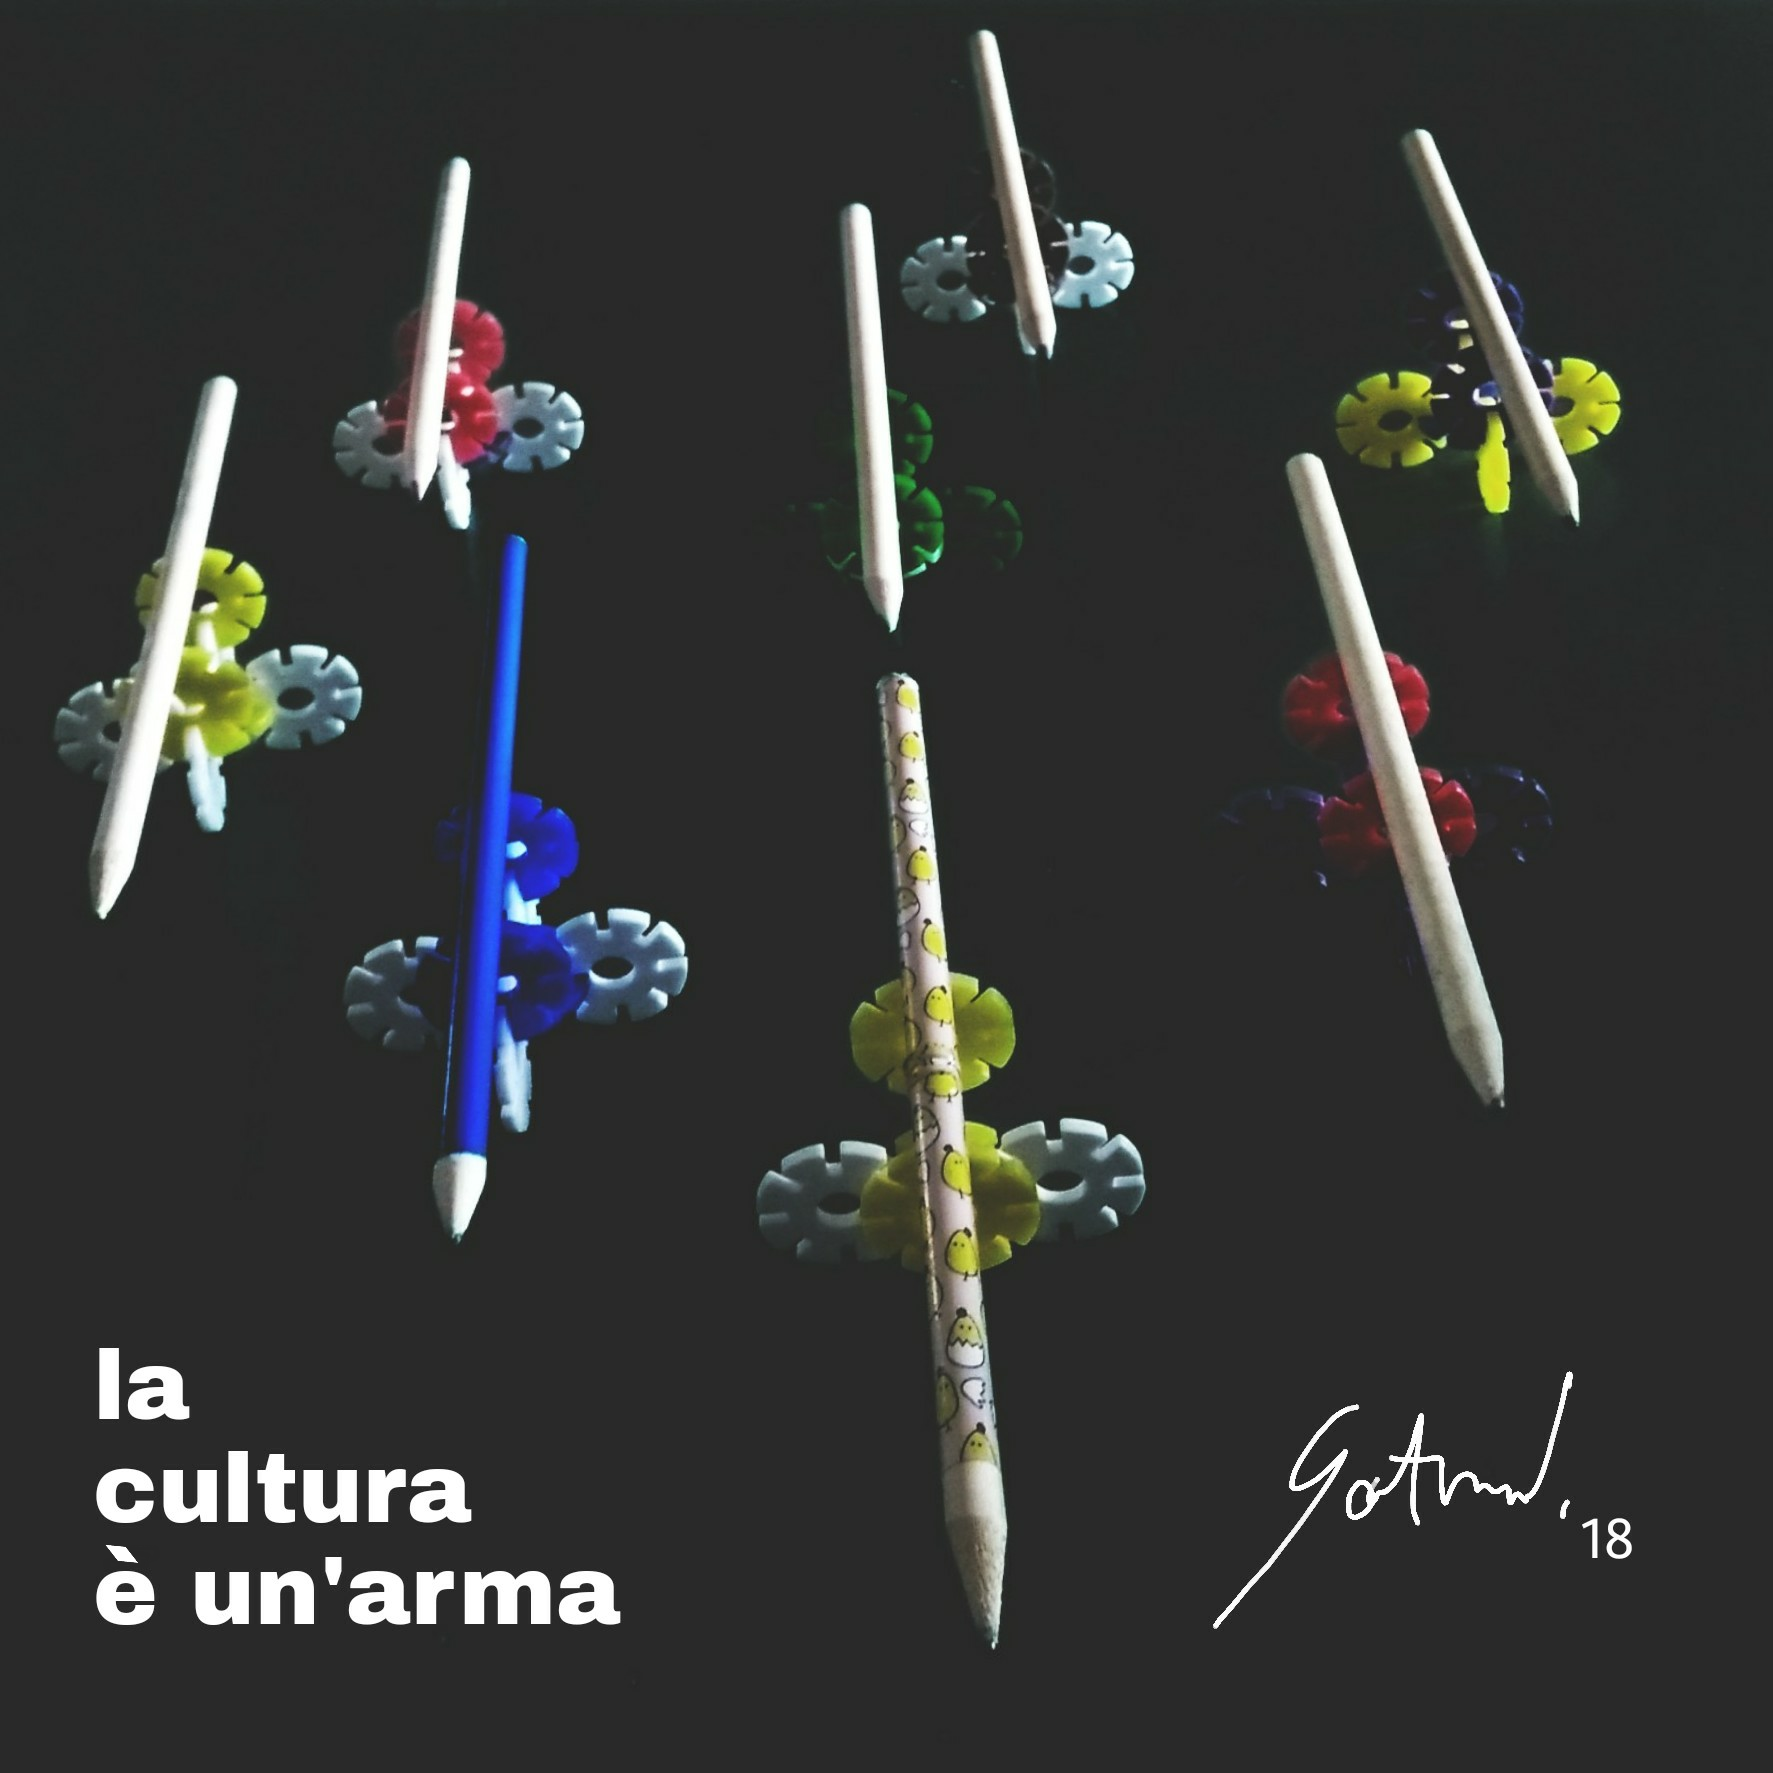 La cultura è un'arma by Aitan Vergara